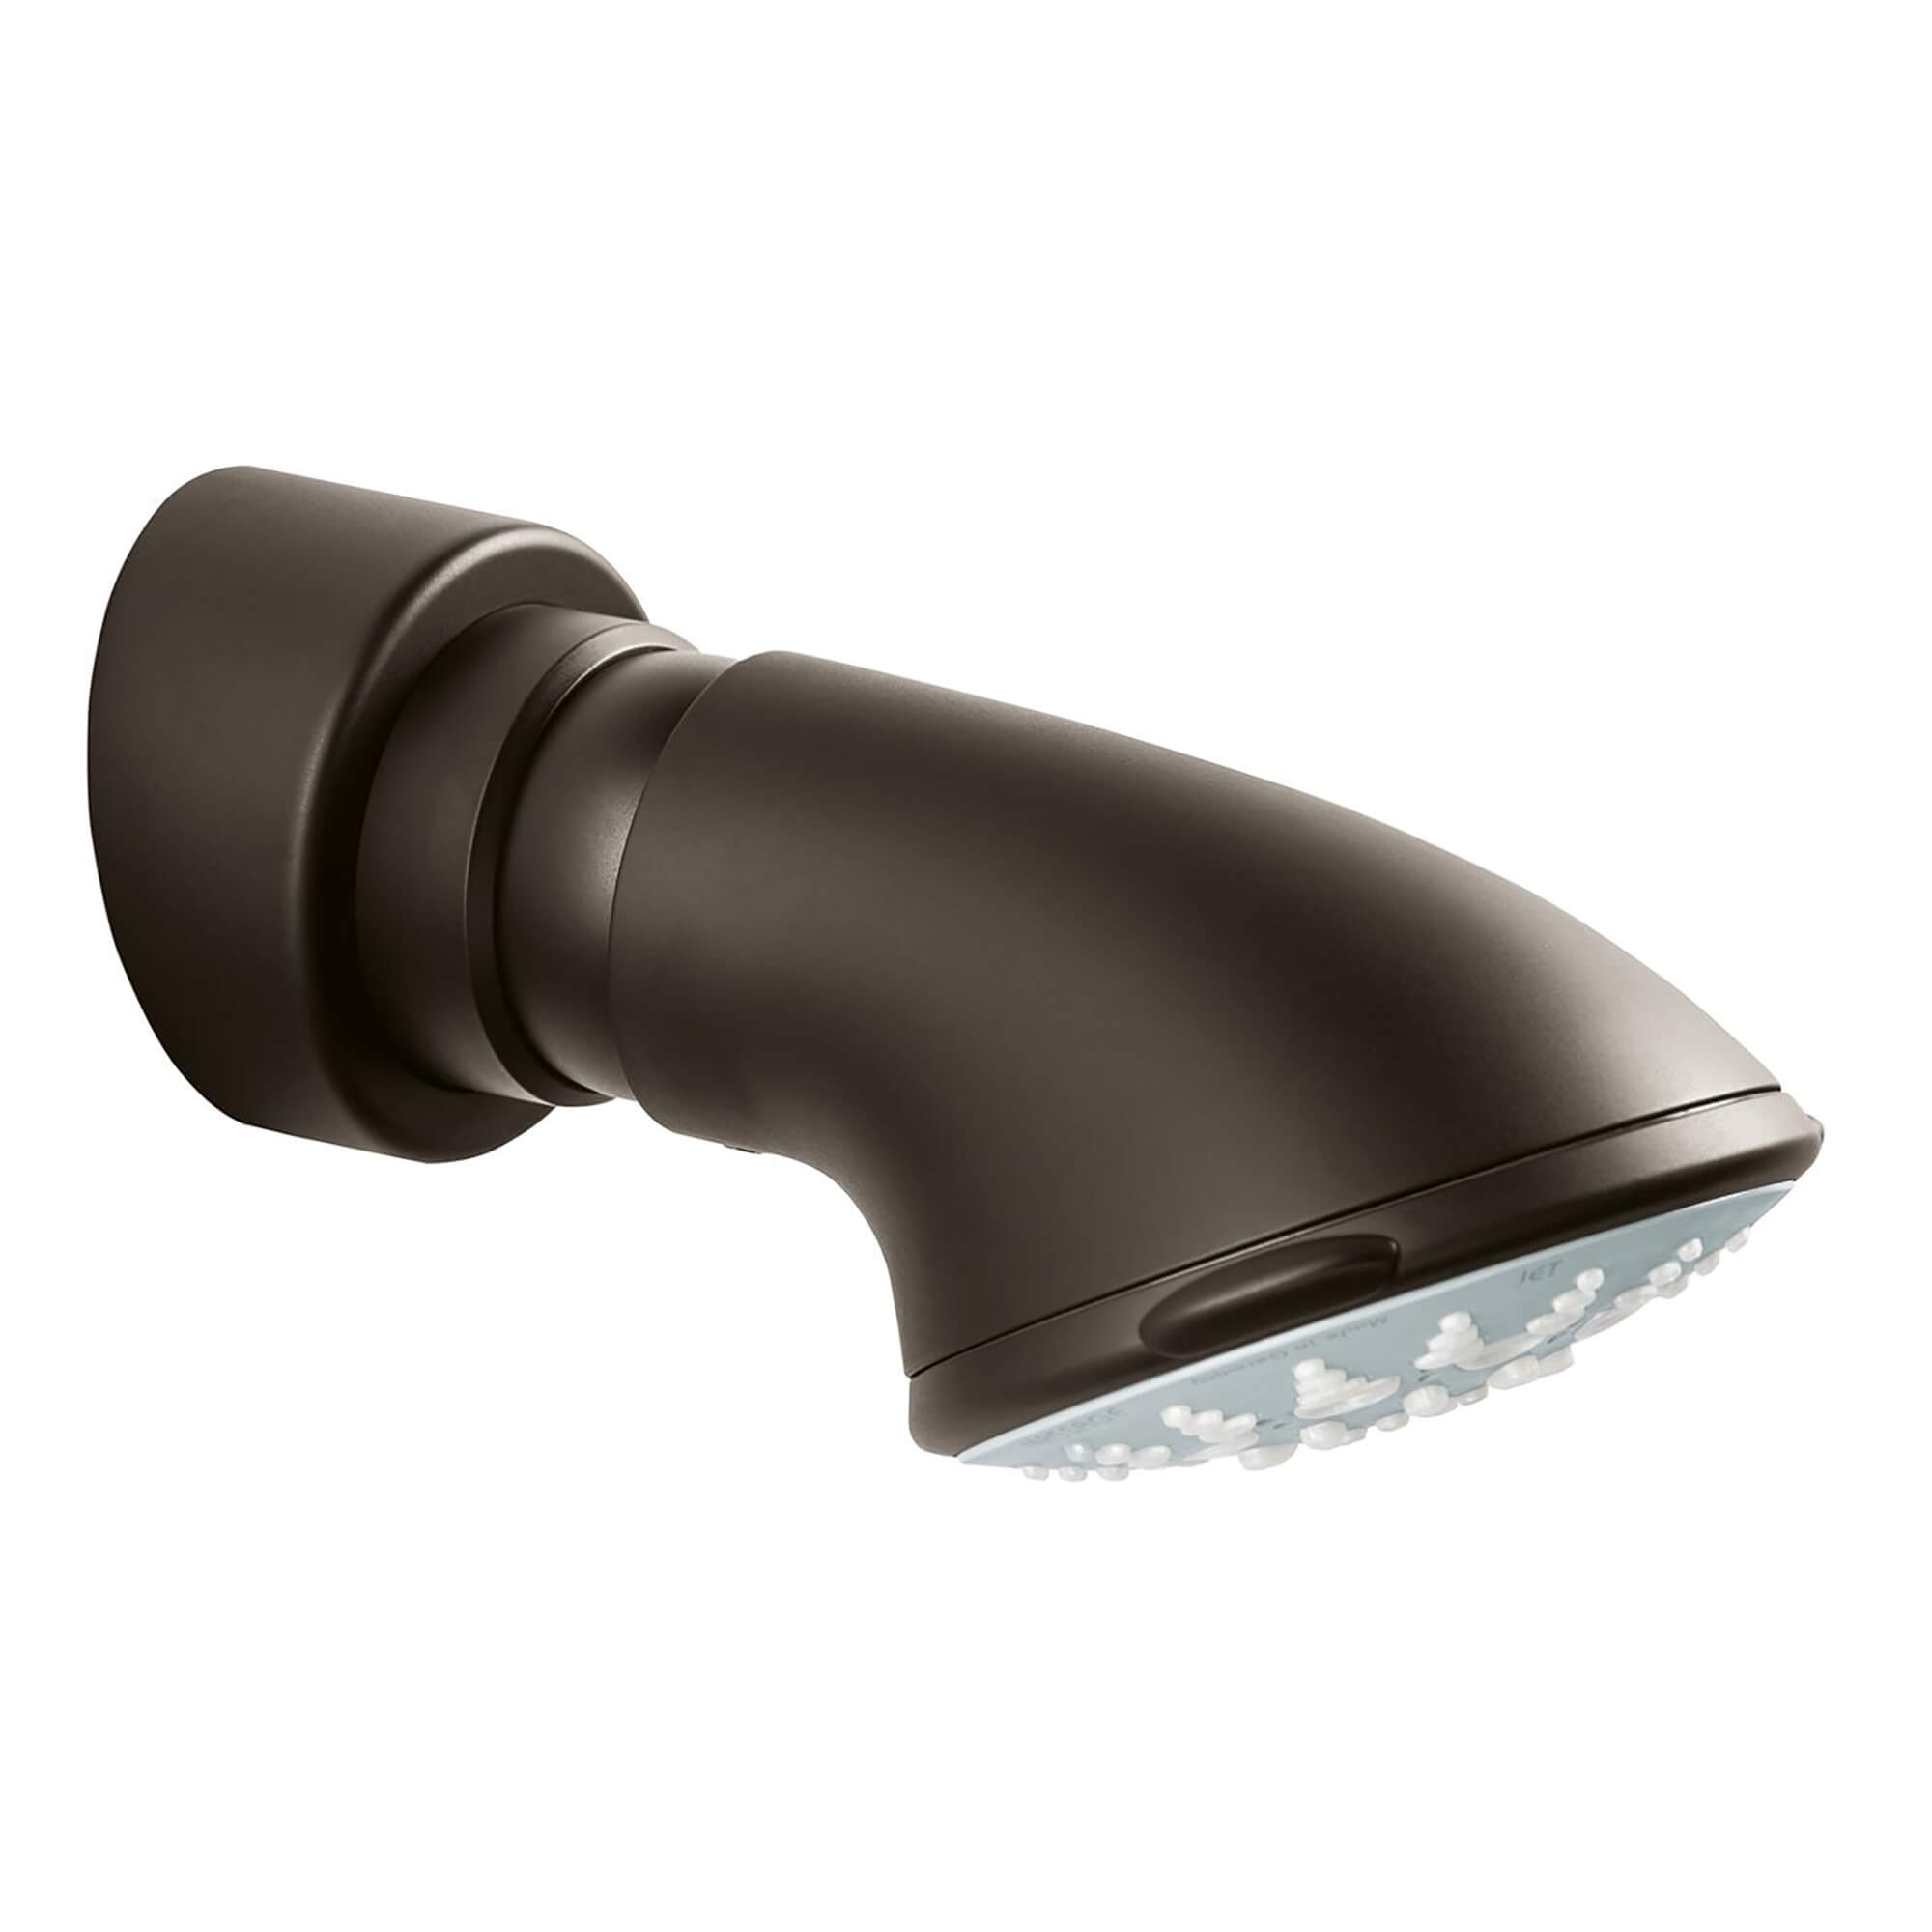 100 Shower Headwith Shower Arm, 4"  - 5 Sprays, 9.5 L/min (2.5 gpm)